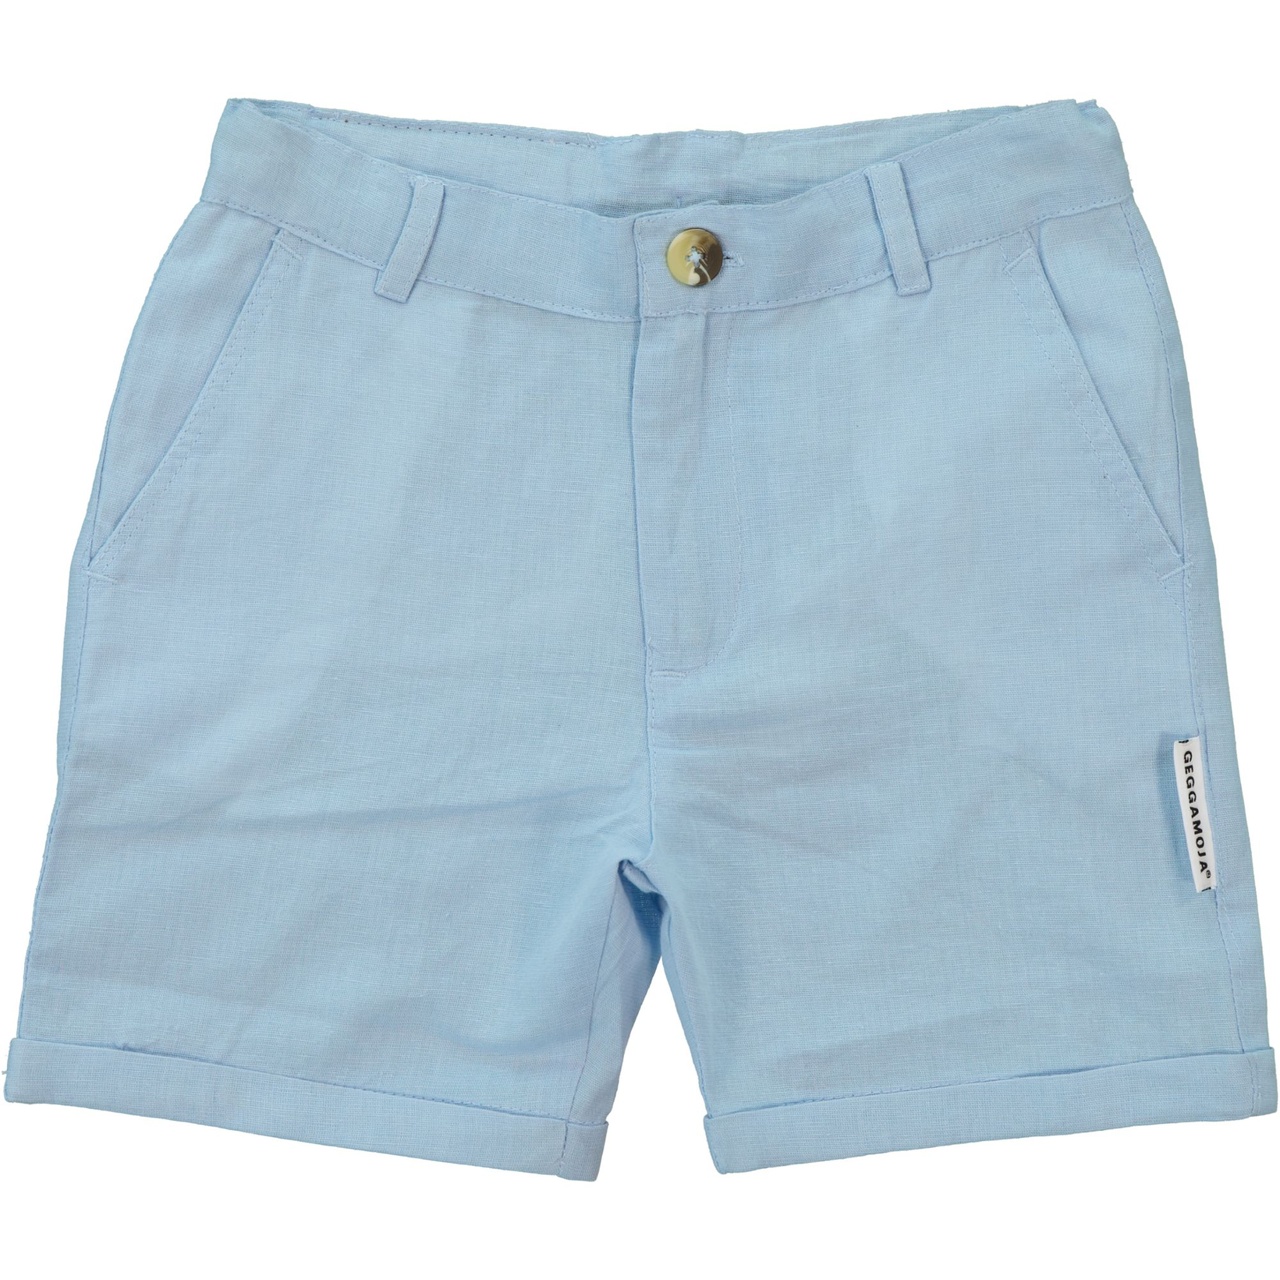 Linnen chino shorts Light blue 110/116